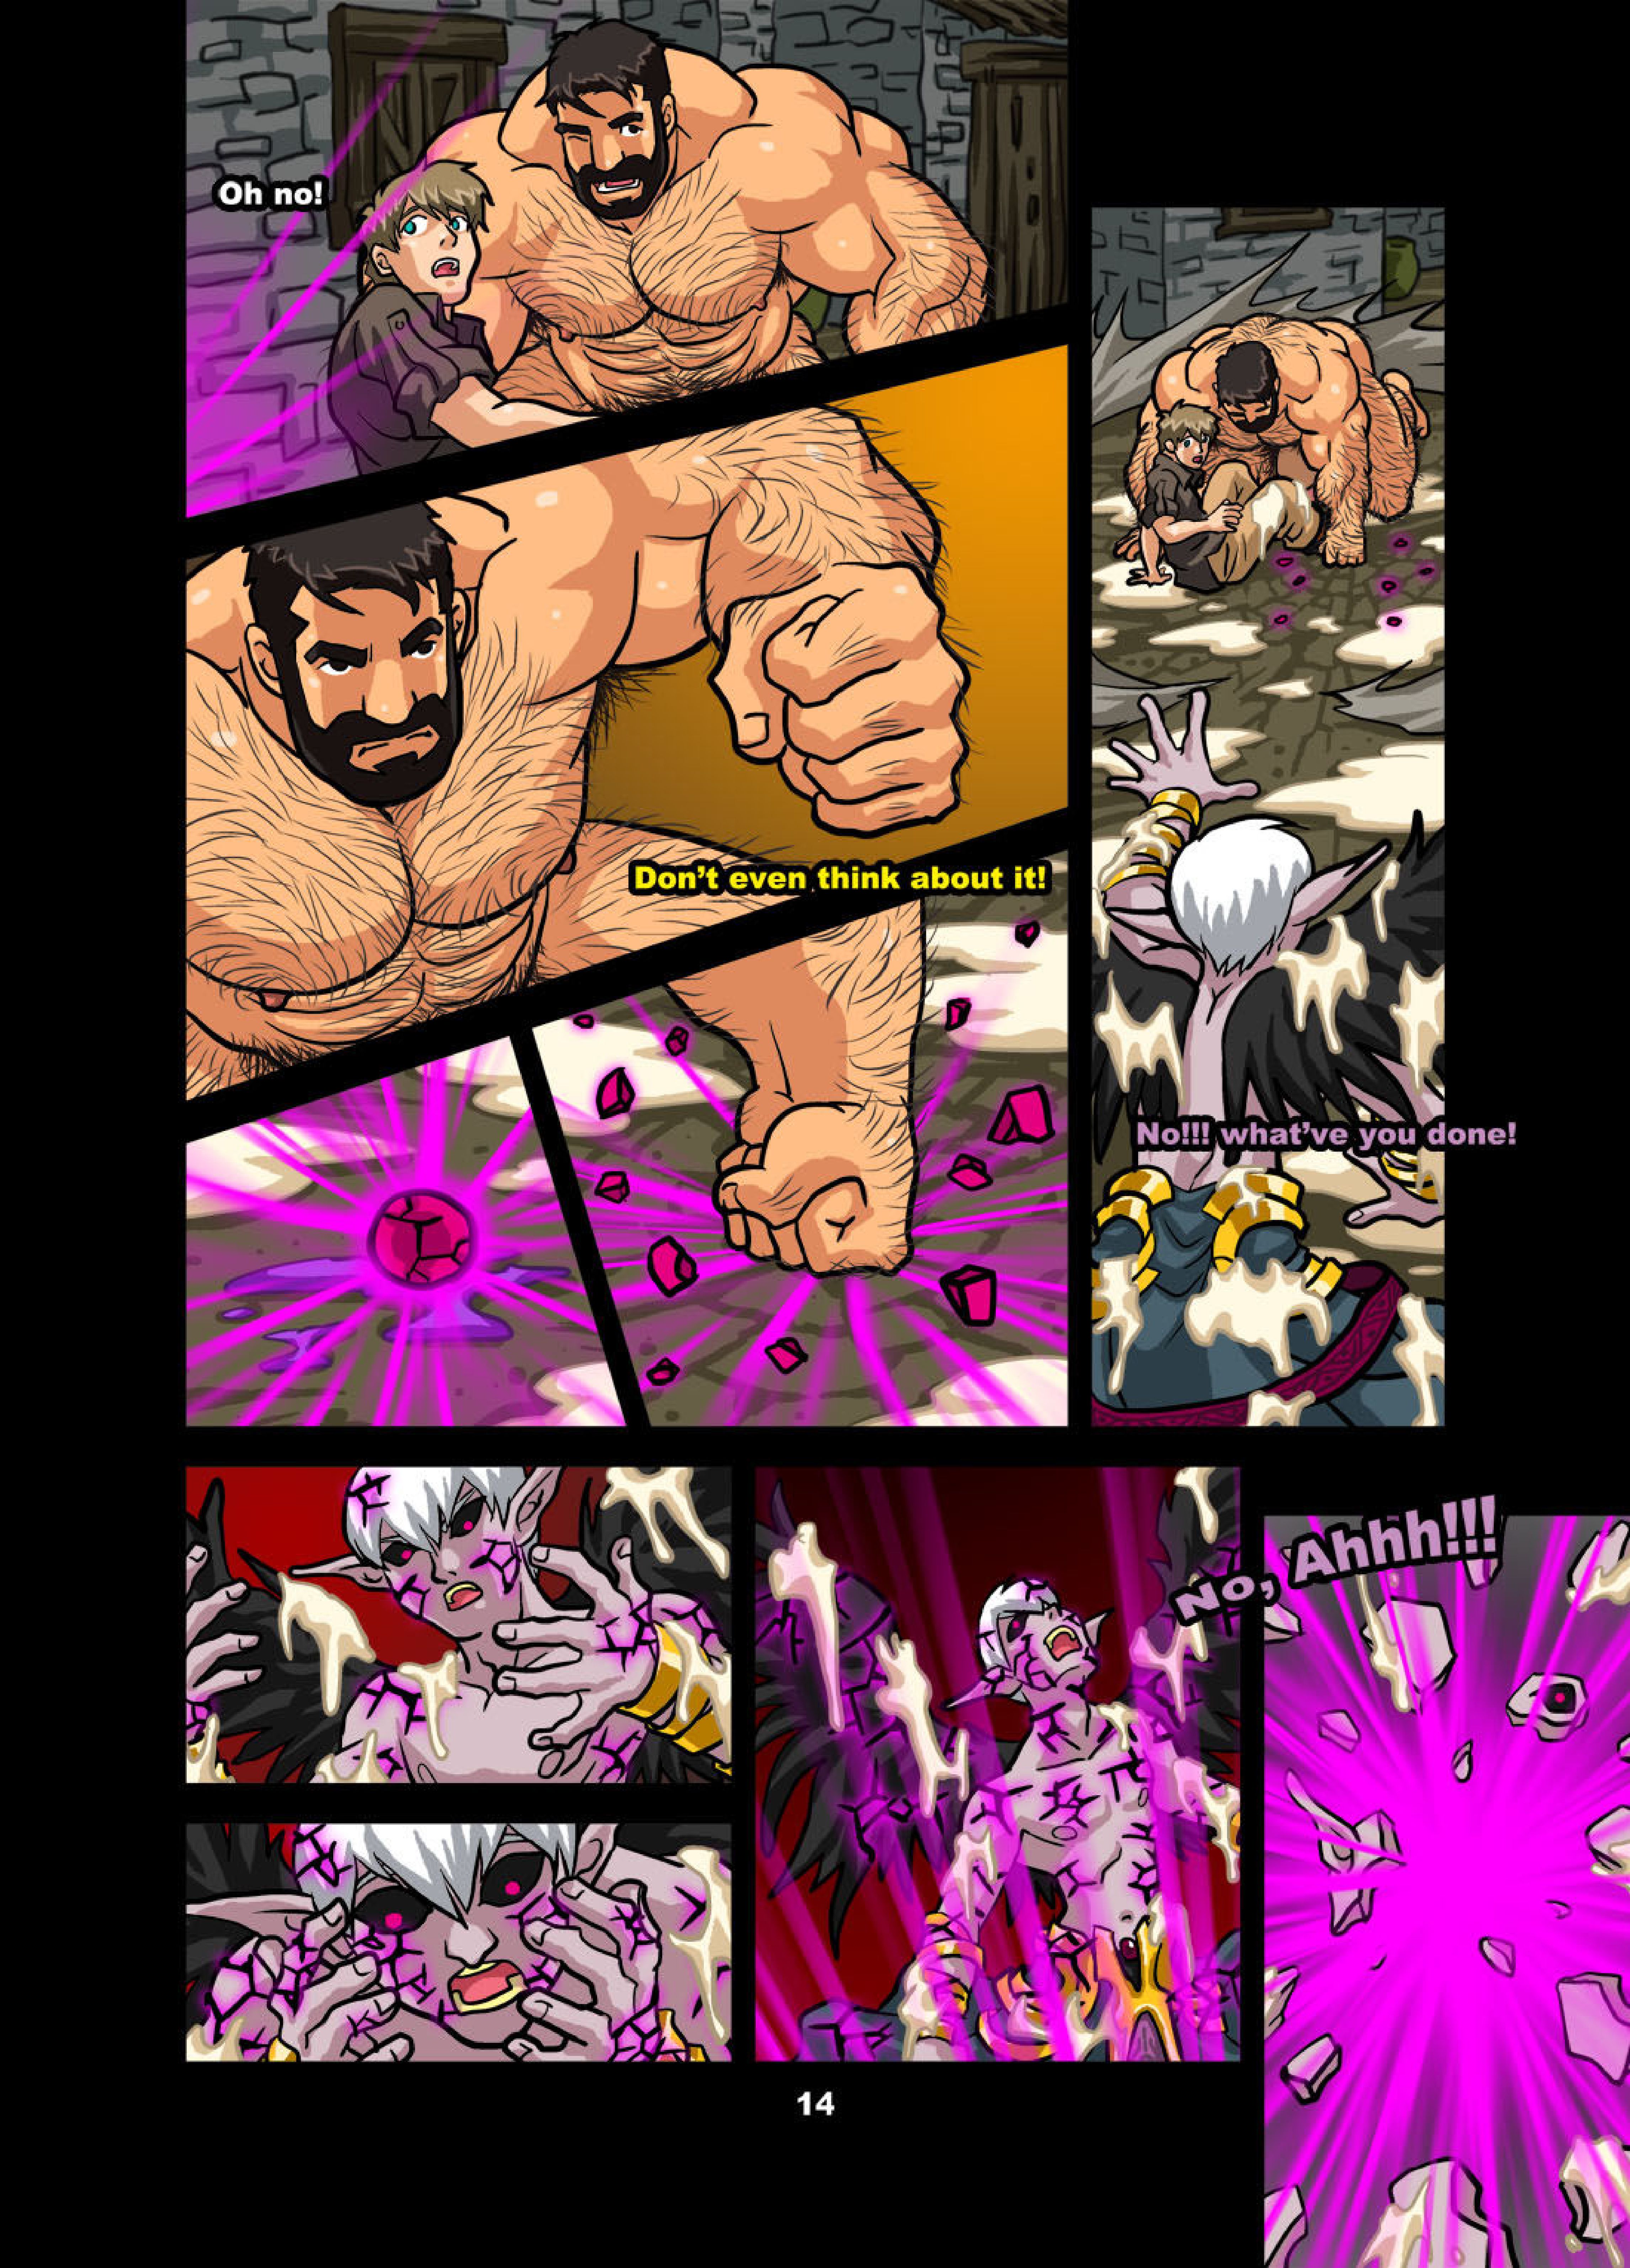 Read Hercules Power Up 3 Hentai Online Porn Manga And Doujinshi